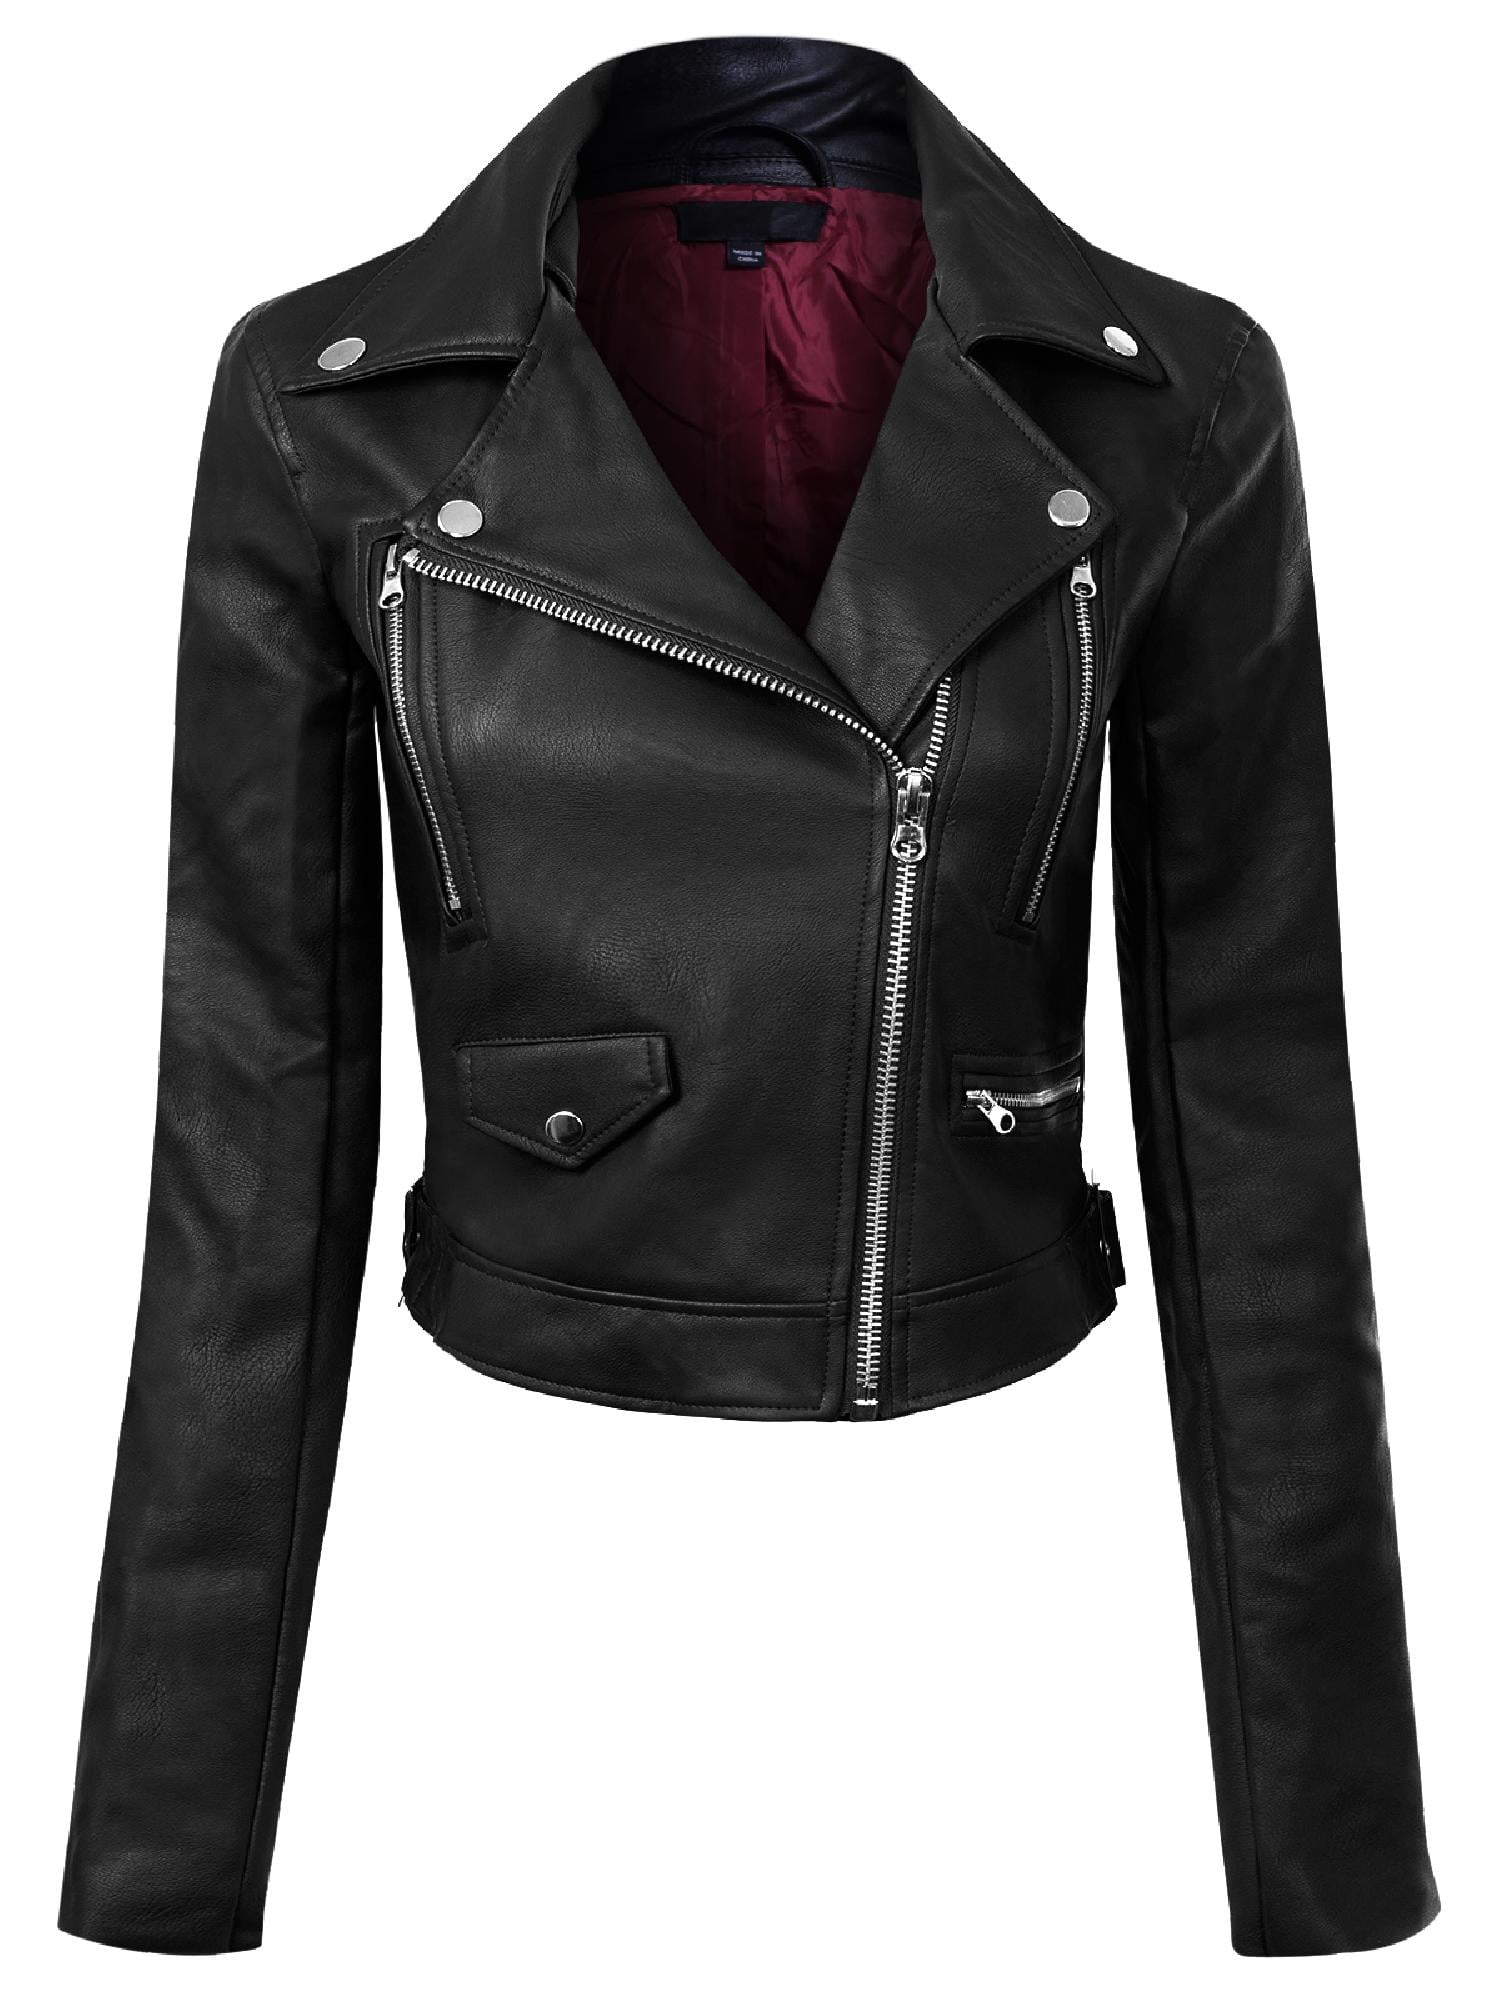 Fashion Jackets Faux Leather Jacket H&M Faux Leather Jacket dark grey-black Lather elements 